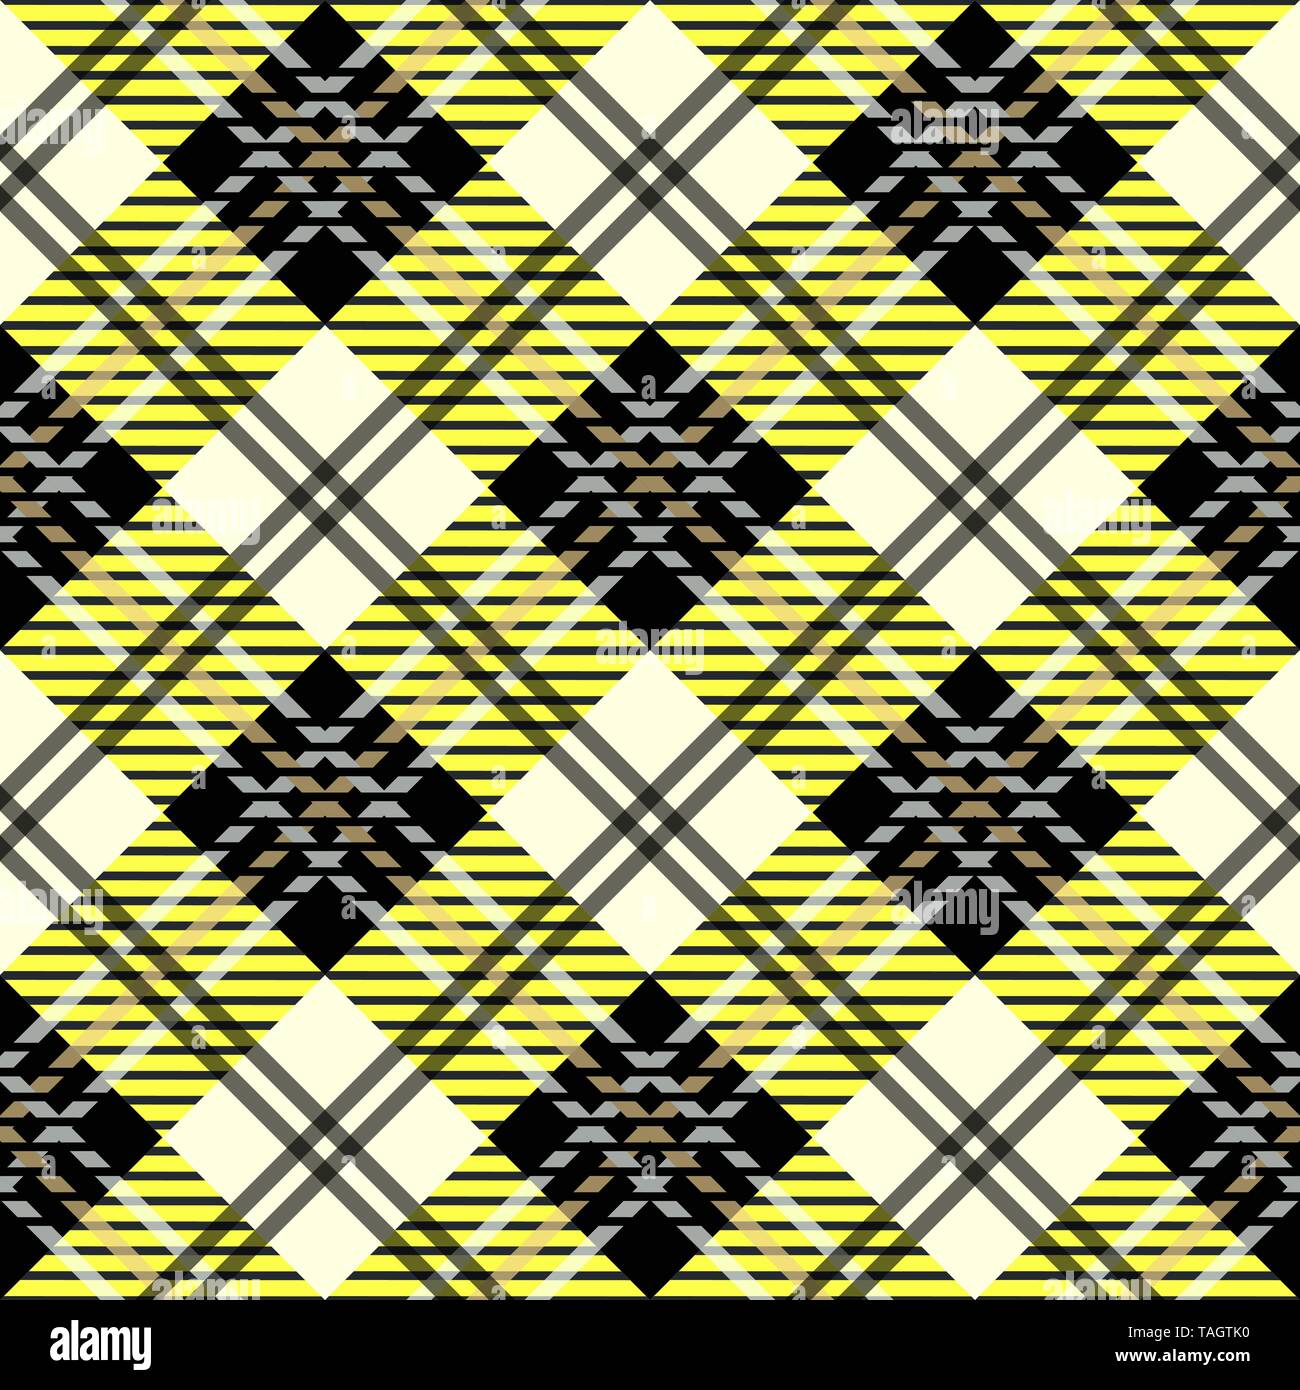 Tartan plaid black white fabric texture seamless pattern. Vector  illustration Stock Vector Image & Art - Alamy